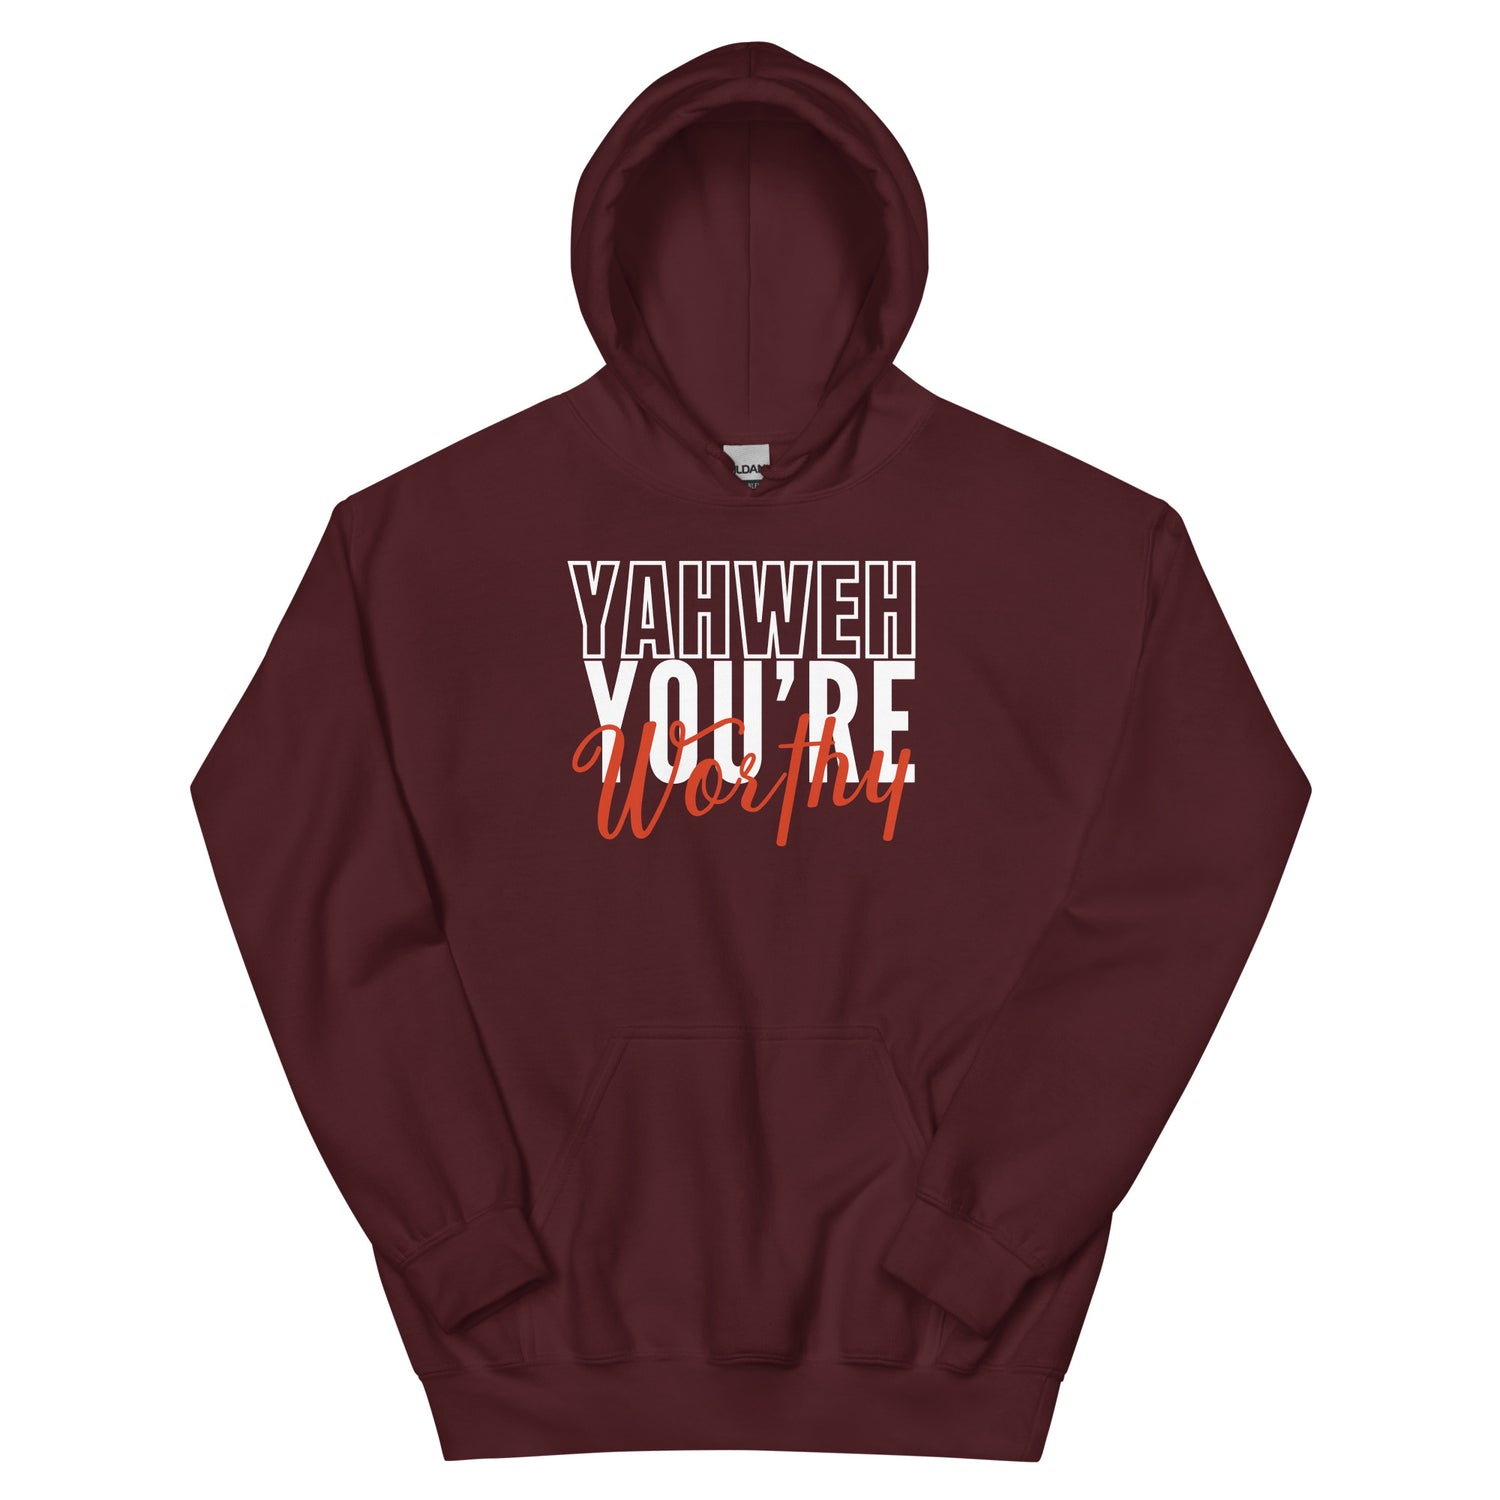 Faith-based hoodies | Christian hoodies for women black maroon red